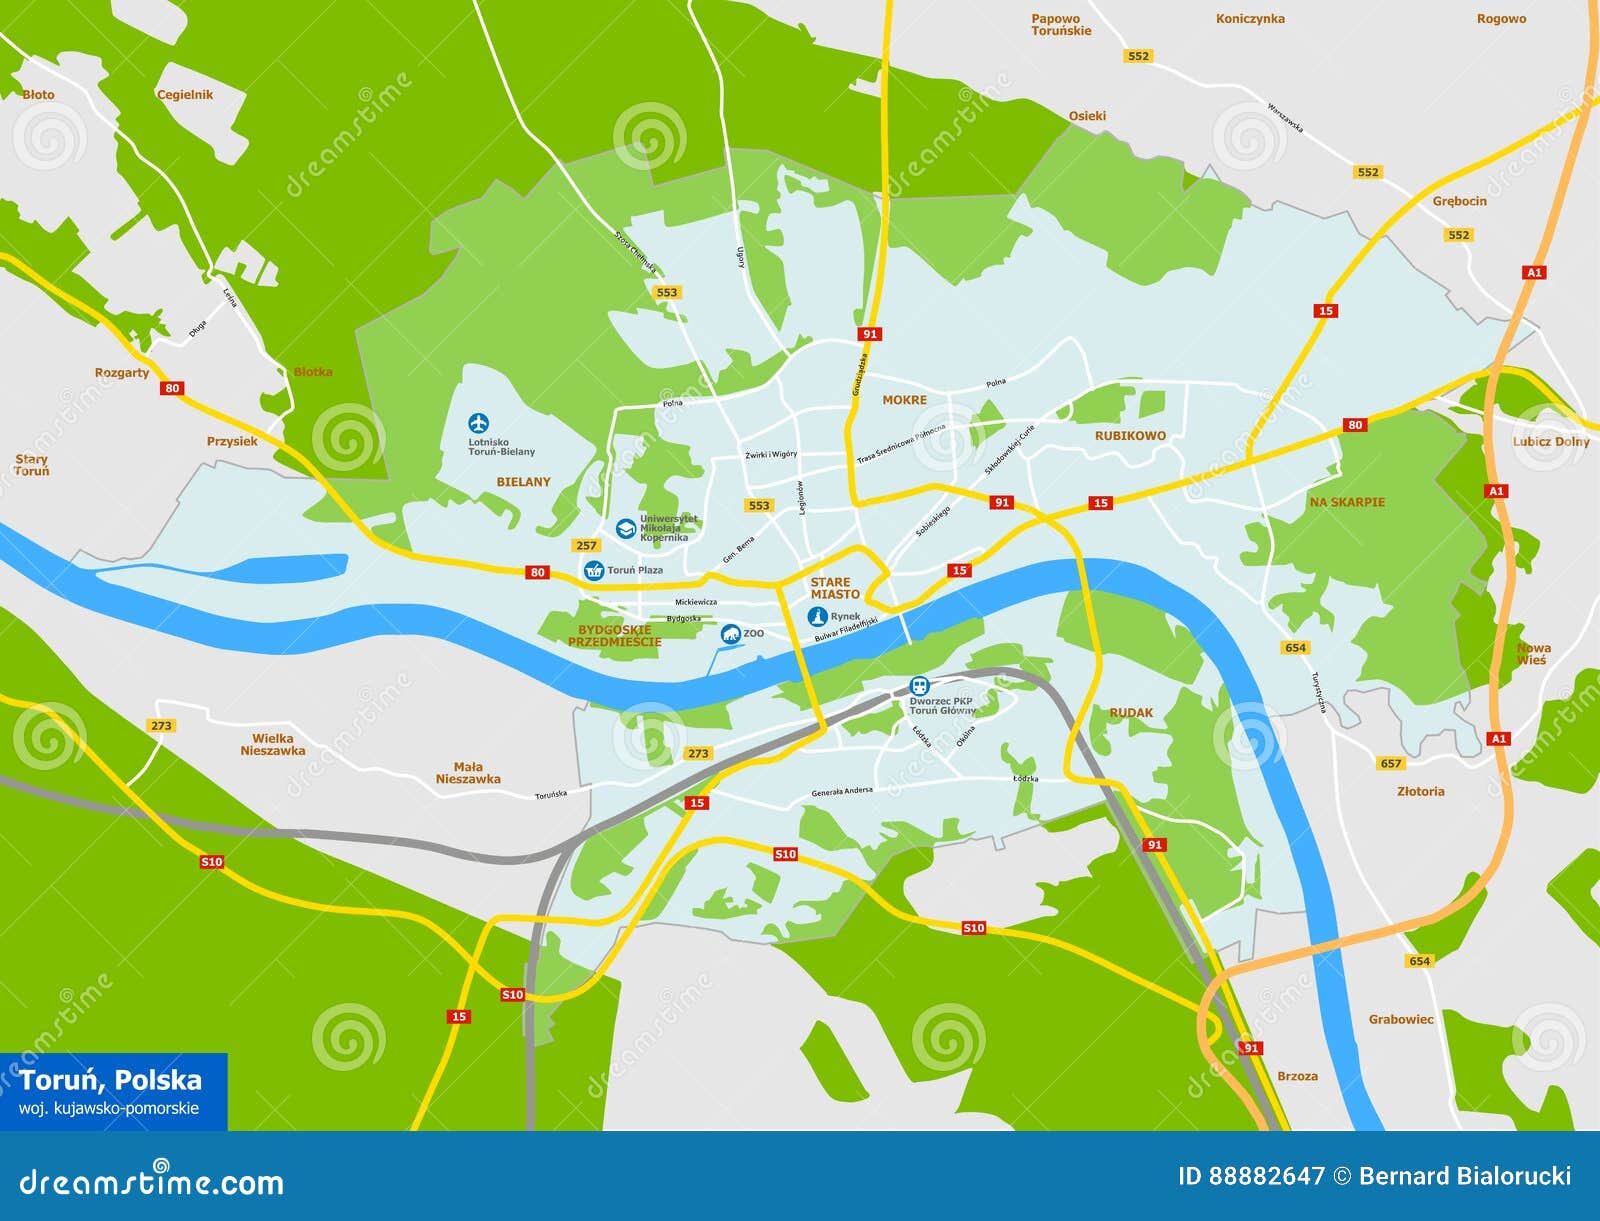 vecor map of torun city - poland - kujawsko-pomorskie province - polish labels